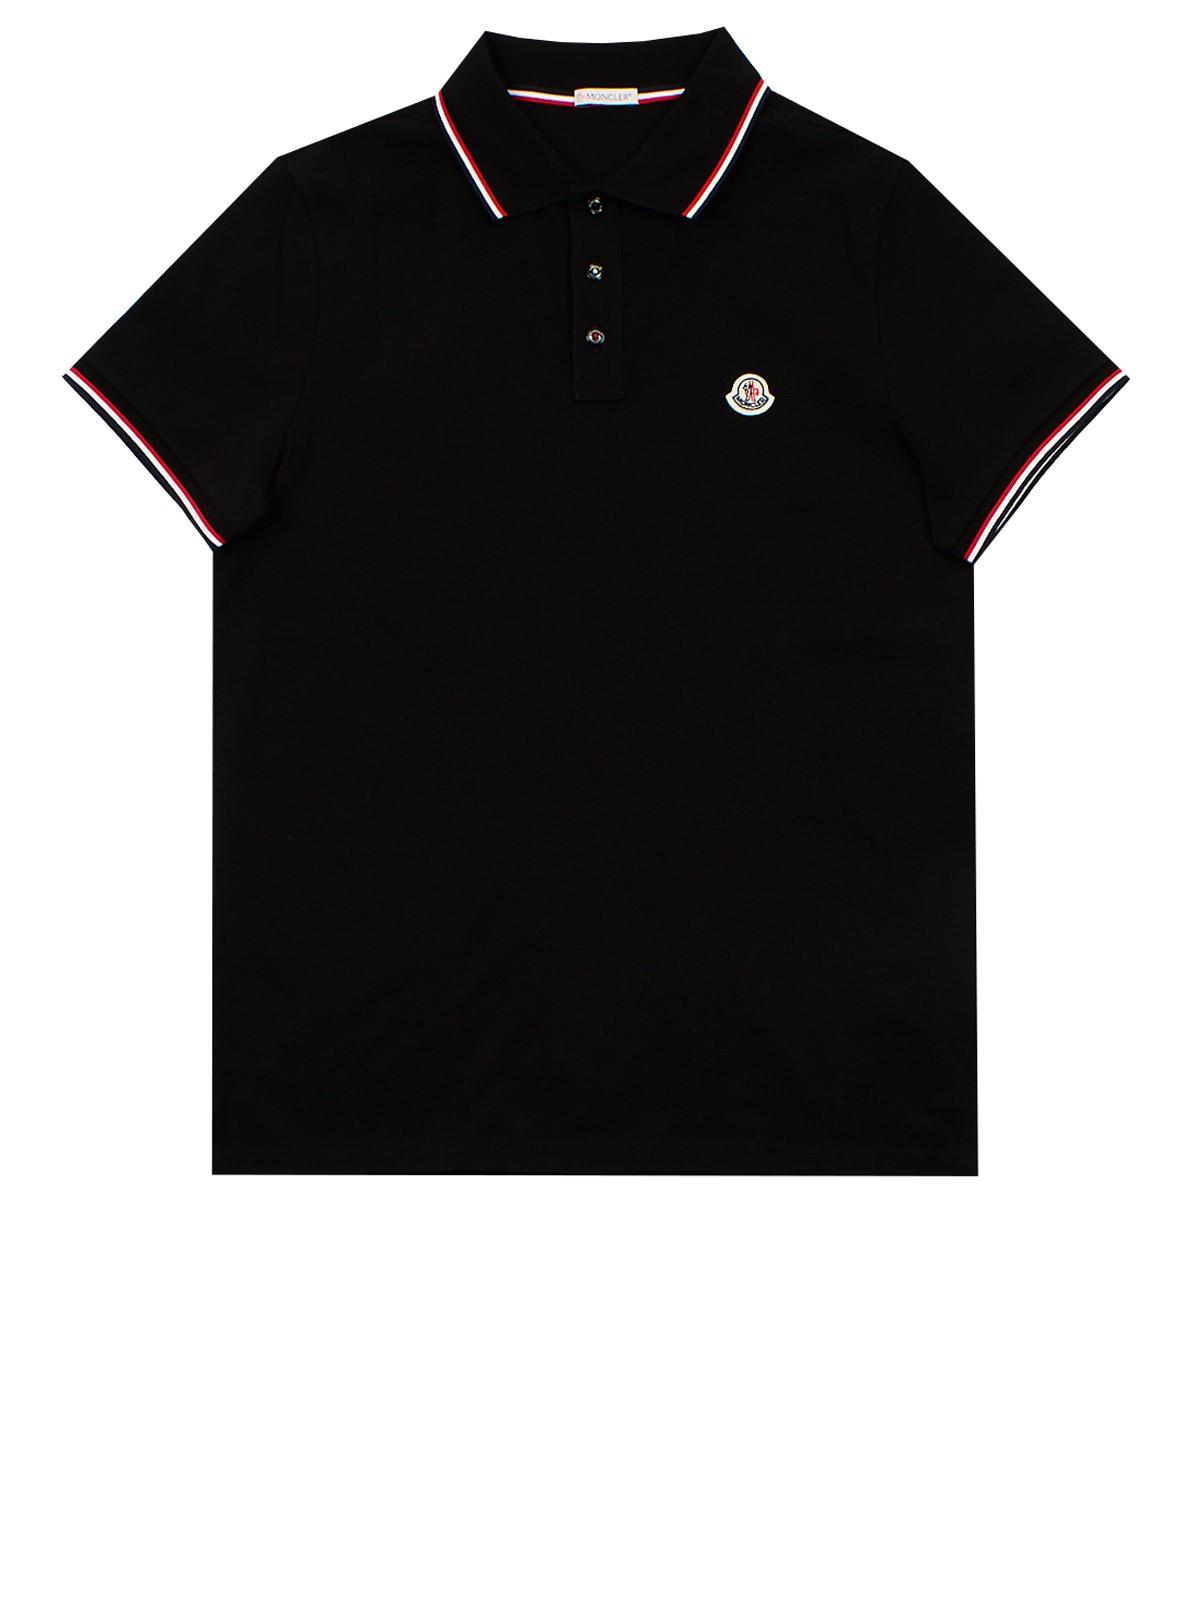 Moncler Black Polo Shirt in Black for Men - Lyst